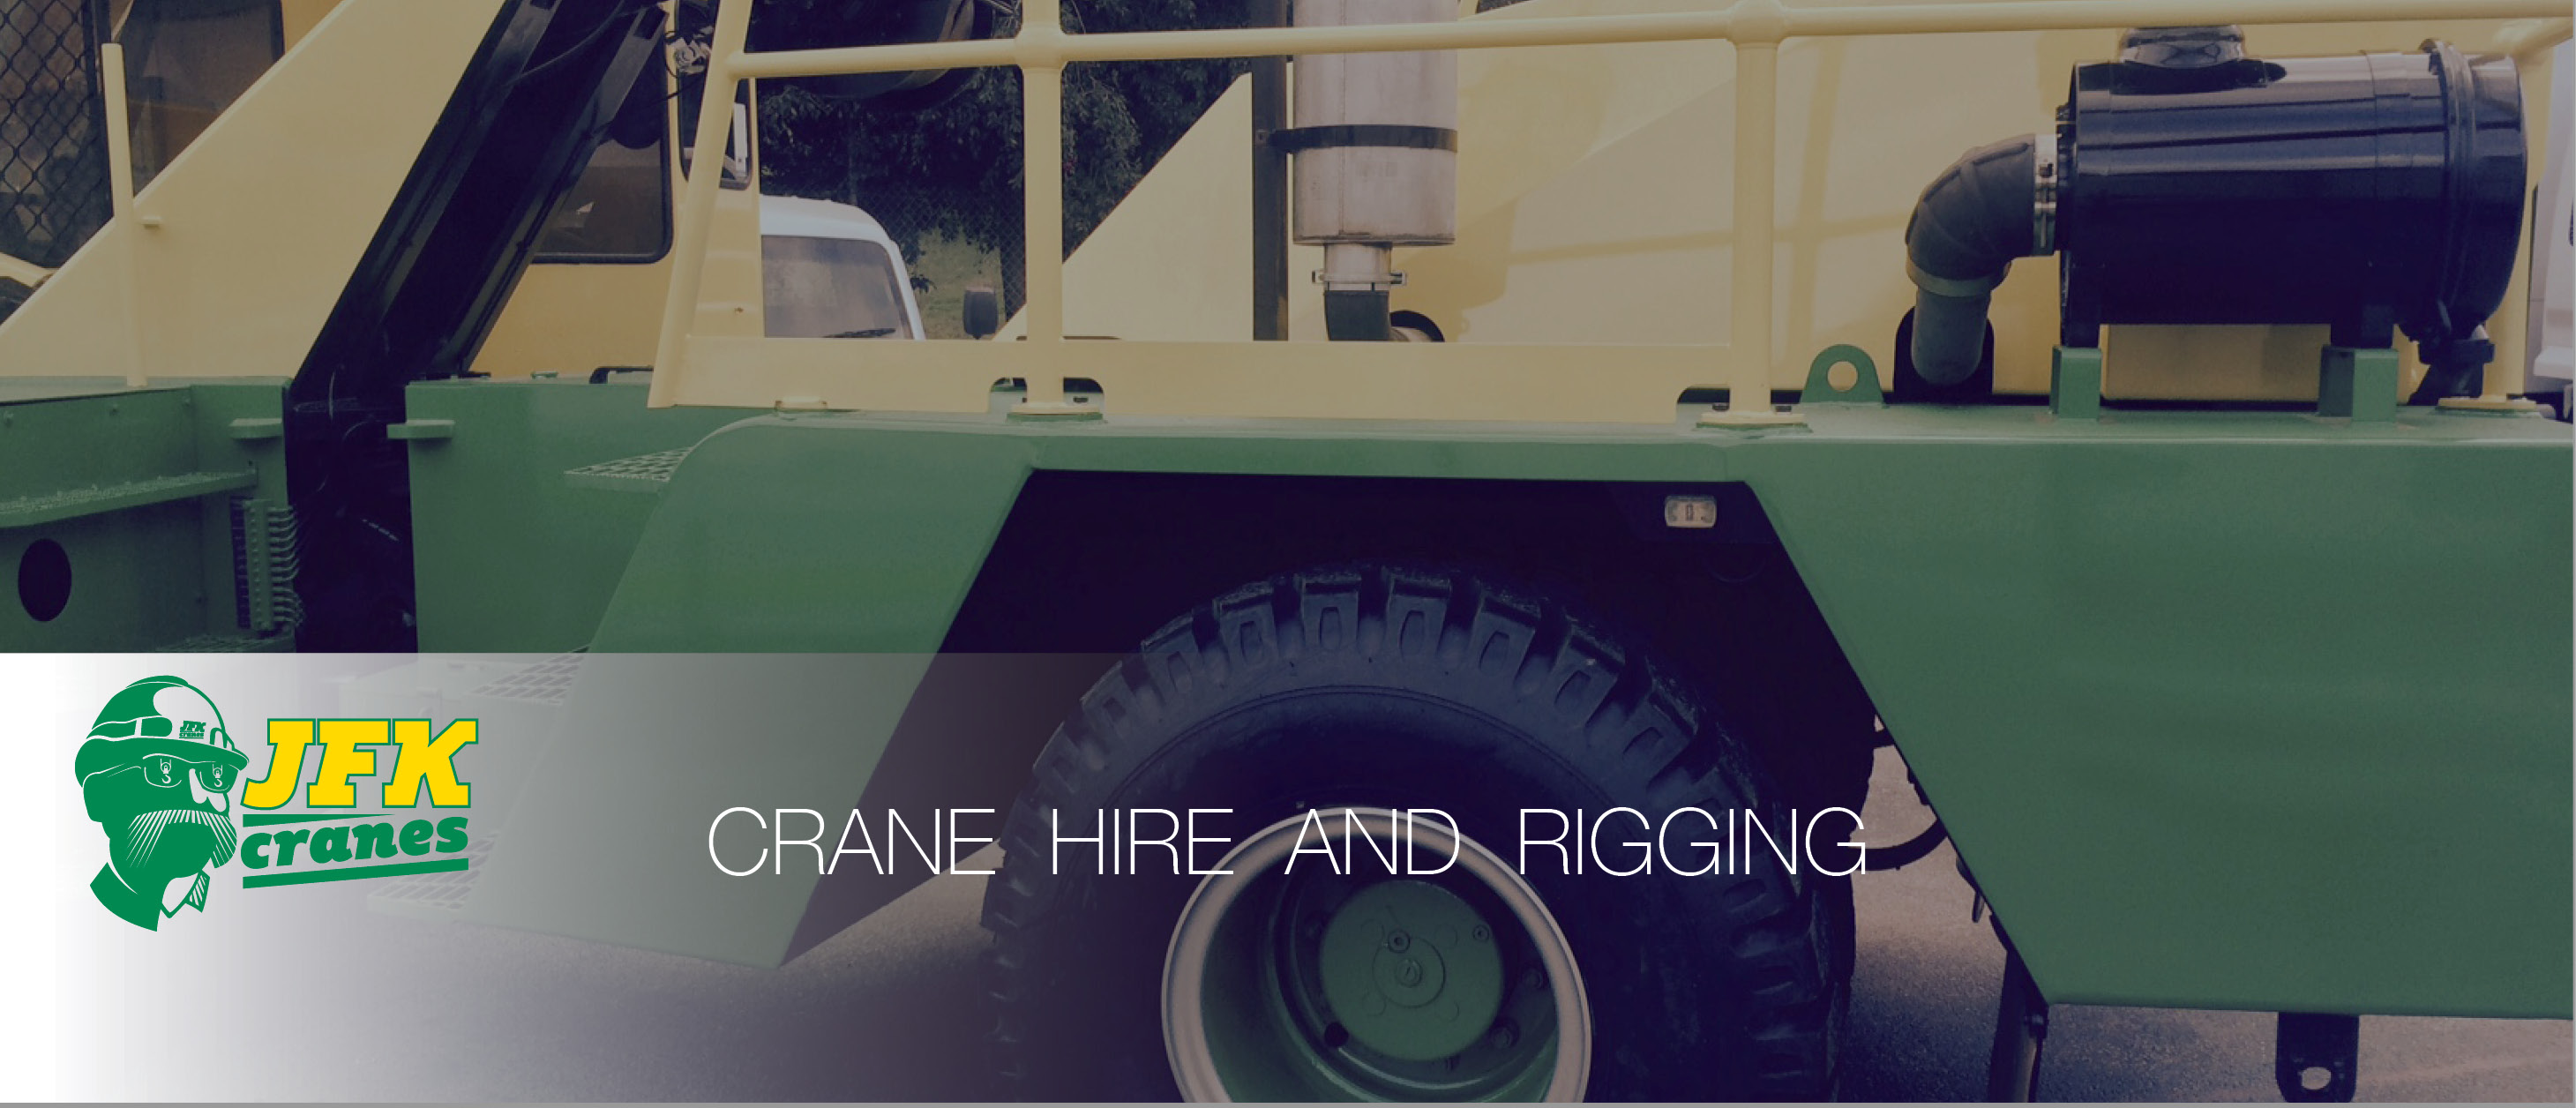 jfk-cranes-crane-hire-rigging-melbourne-25t-franna-slider-c